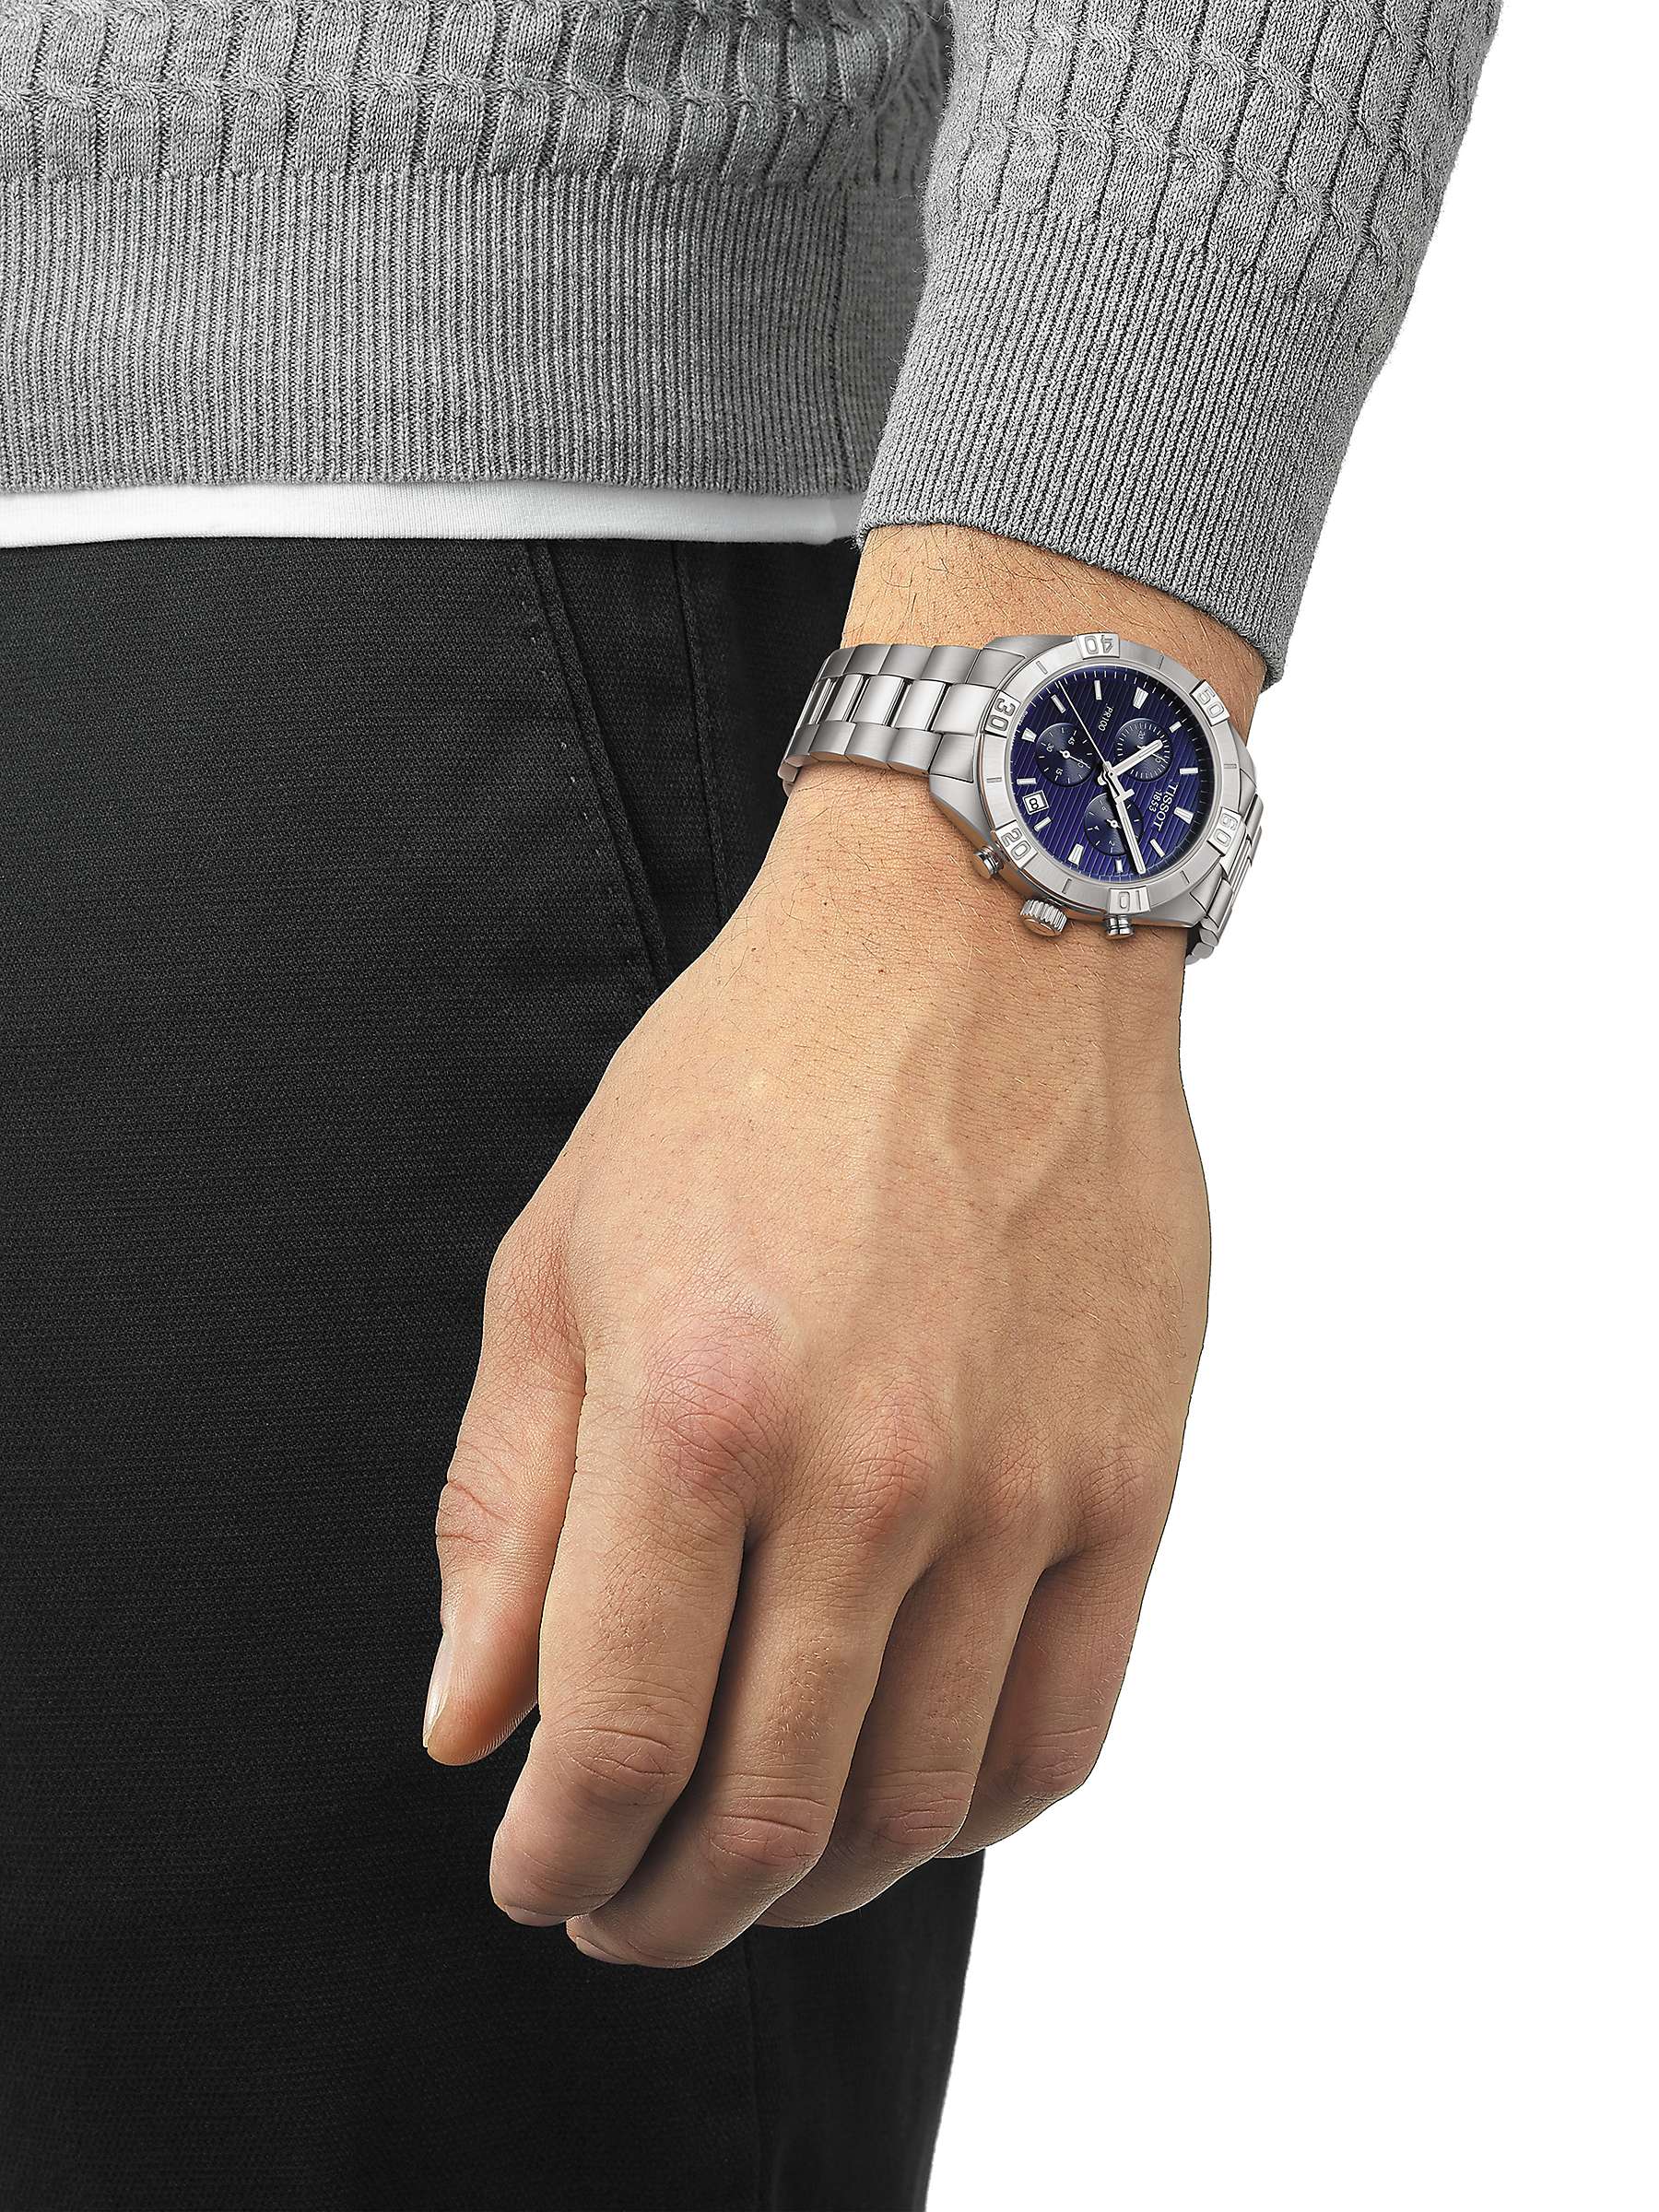 Buy Tissot T1016171104100 Men's PR100 Sport Chronograph Date Bracelet Strap Watch, Silver/Blue Online at johnlewis.com